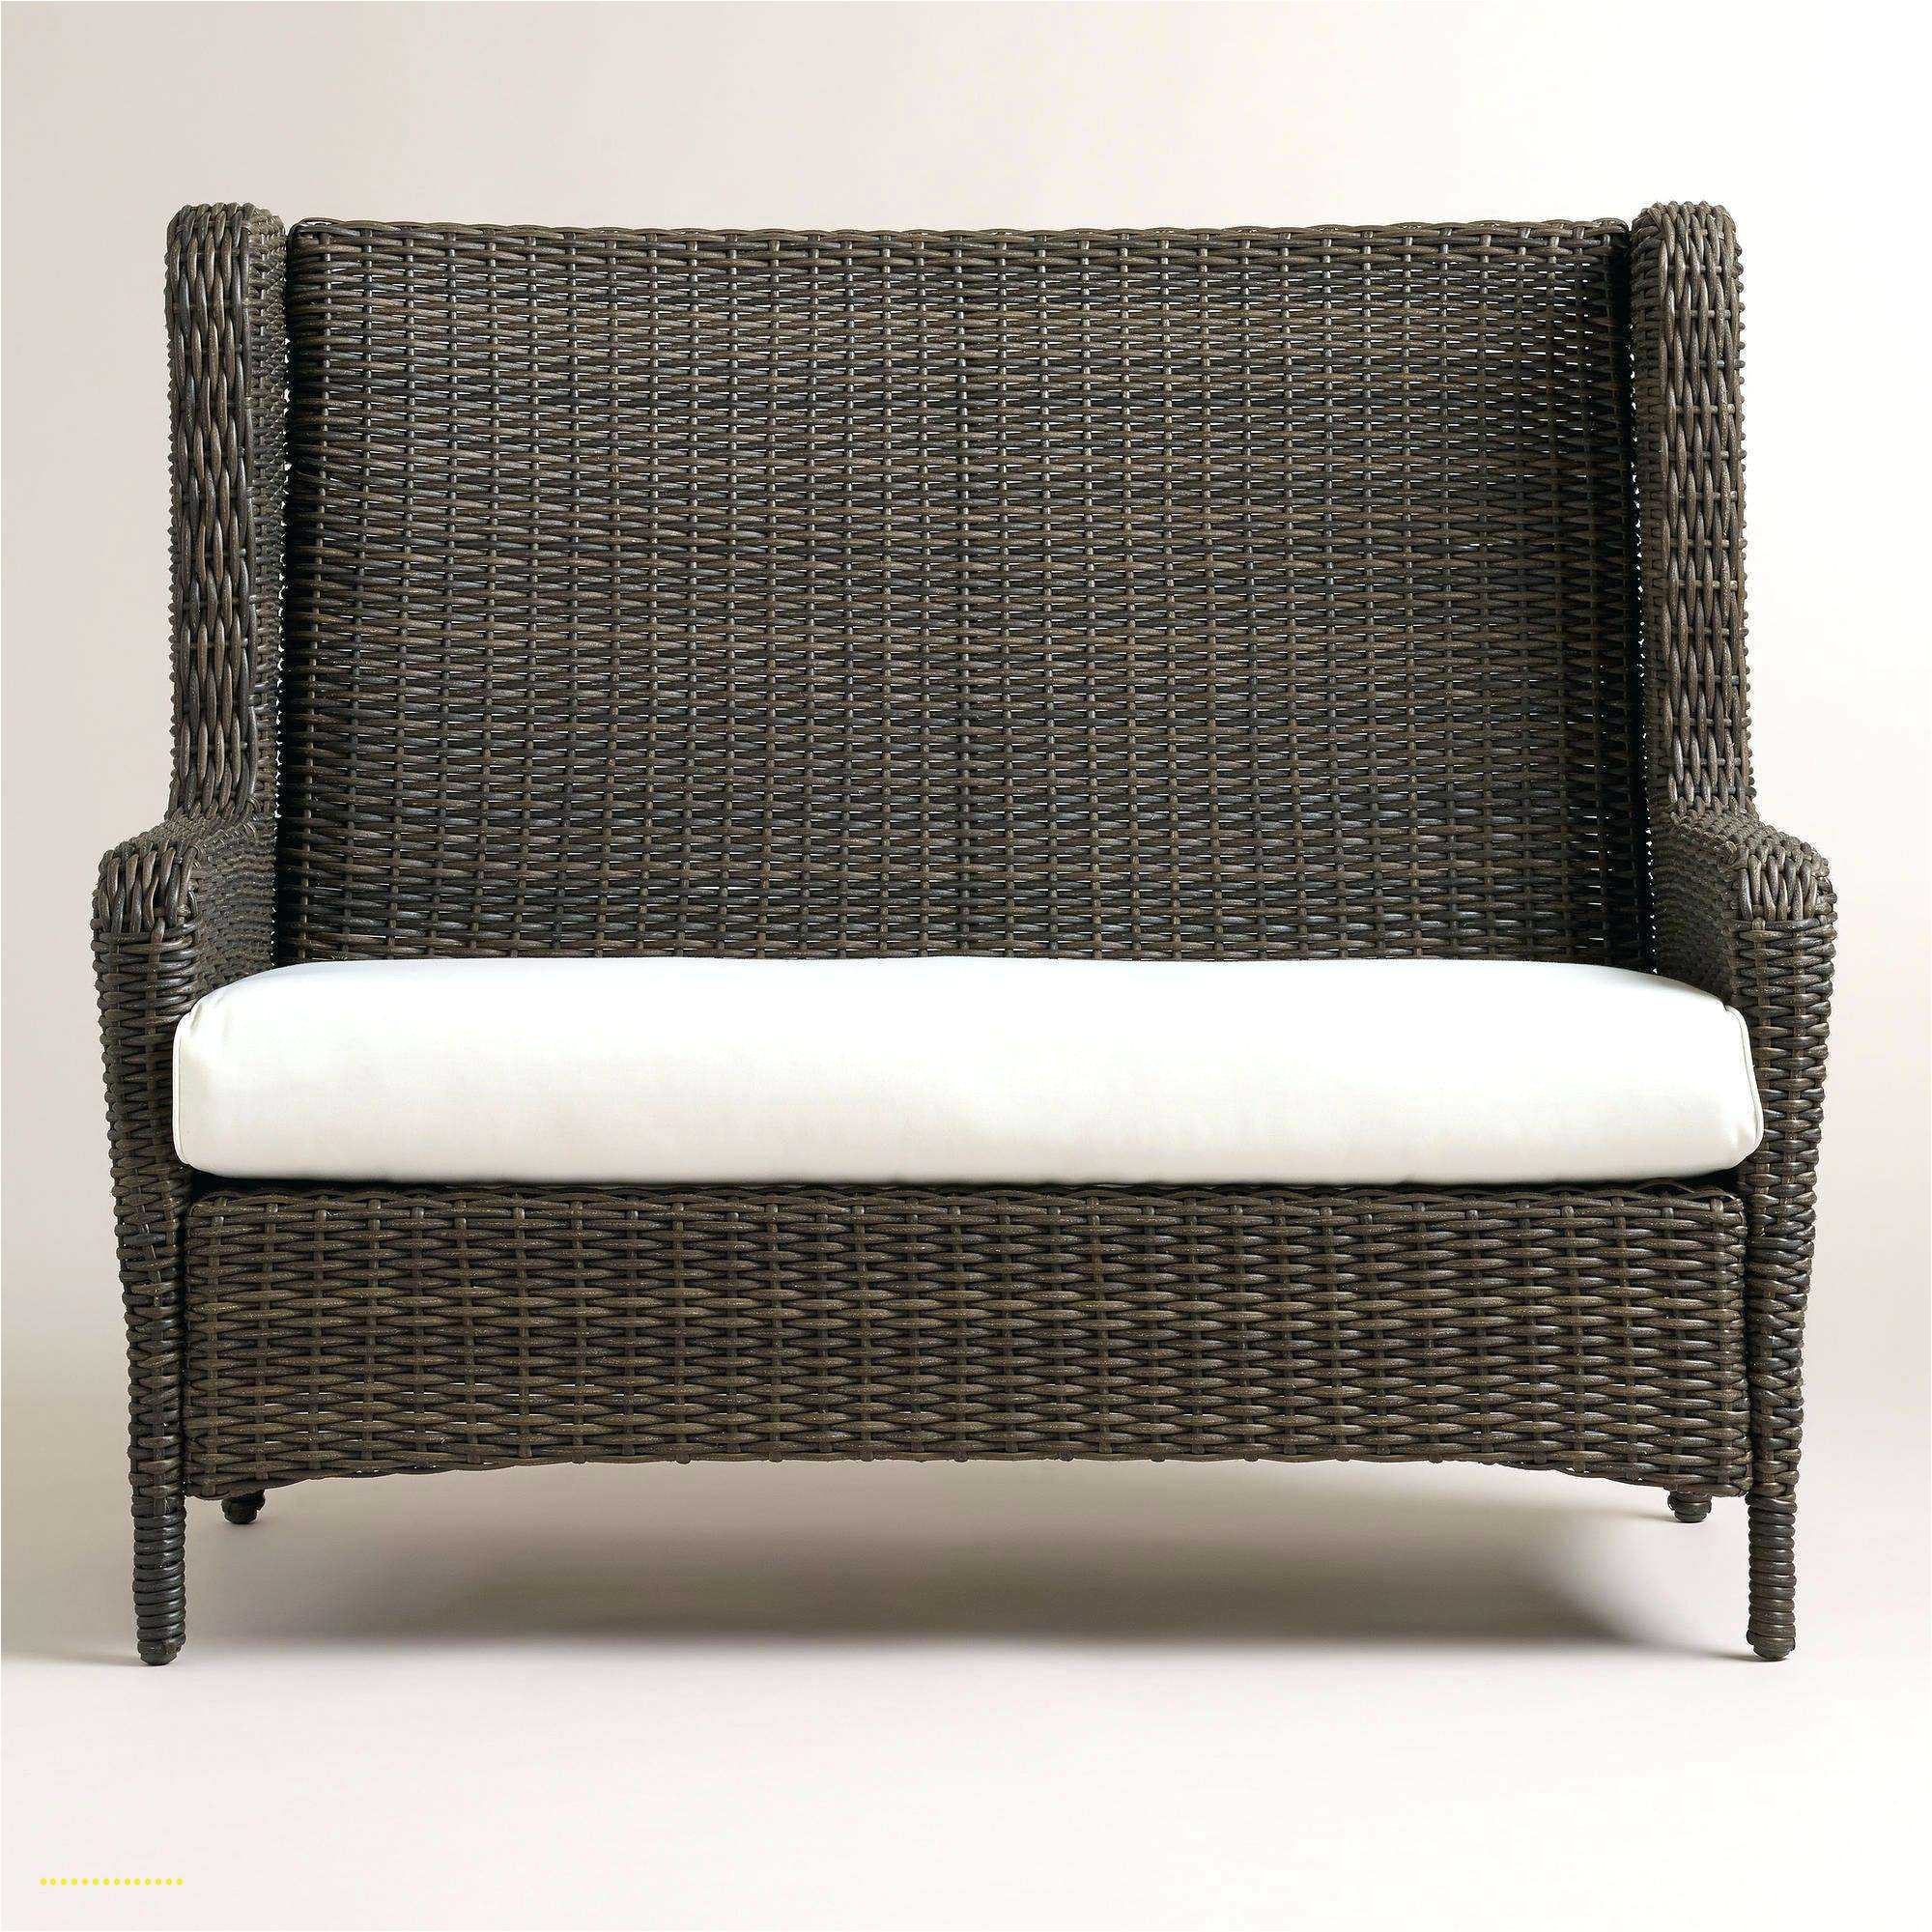 Papasan Cushion Cover Ikea Inspirational Papasan Chair Slipcover Home Design